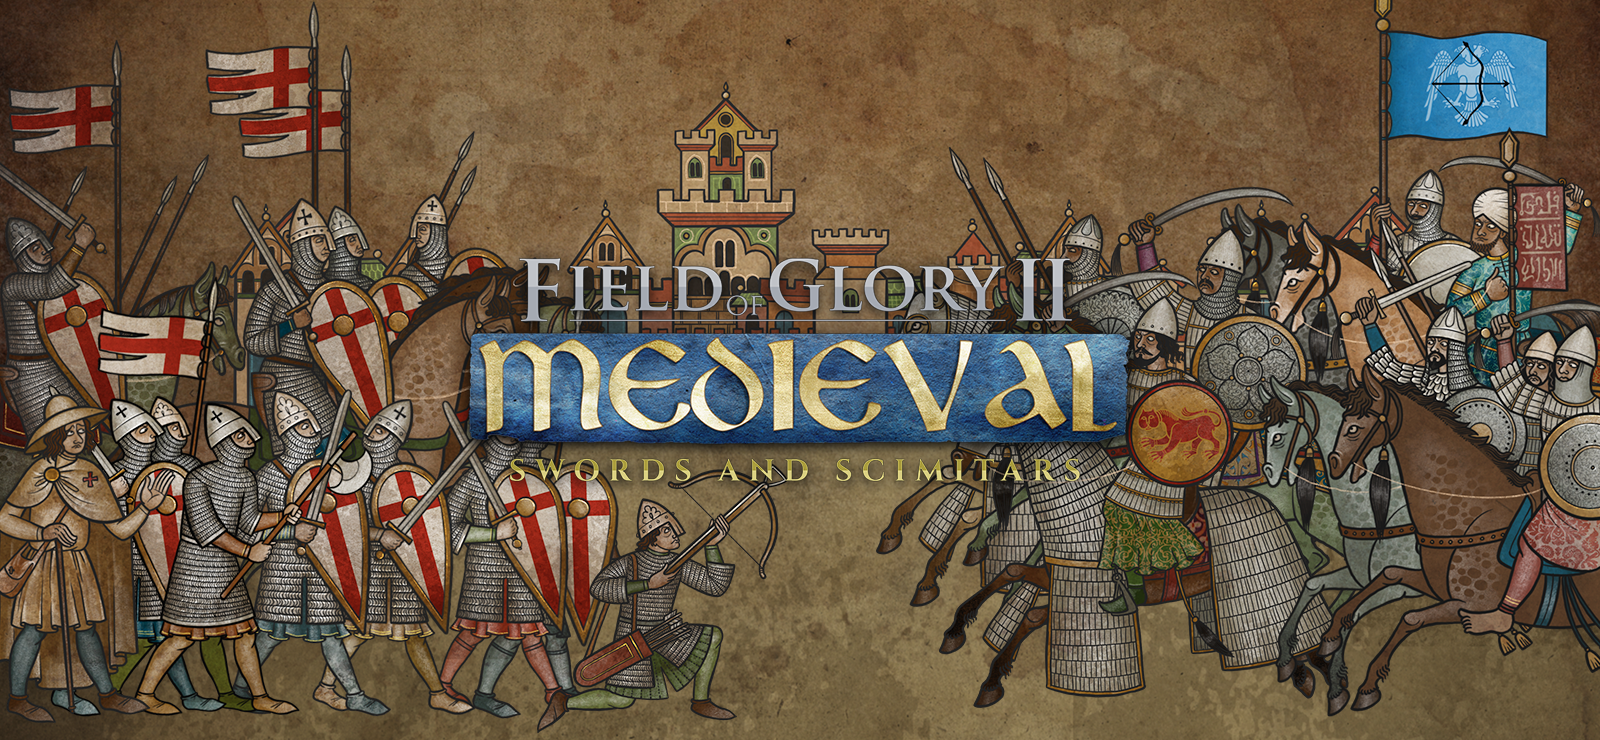 Field Of Glory II: Medieval - Swords And Scimitars